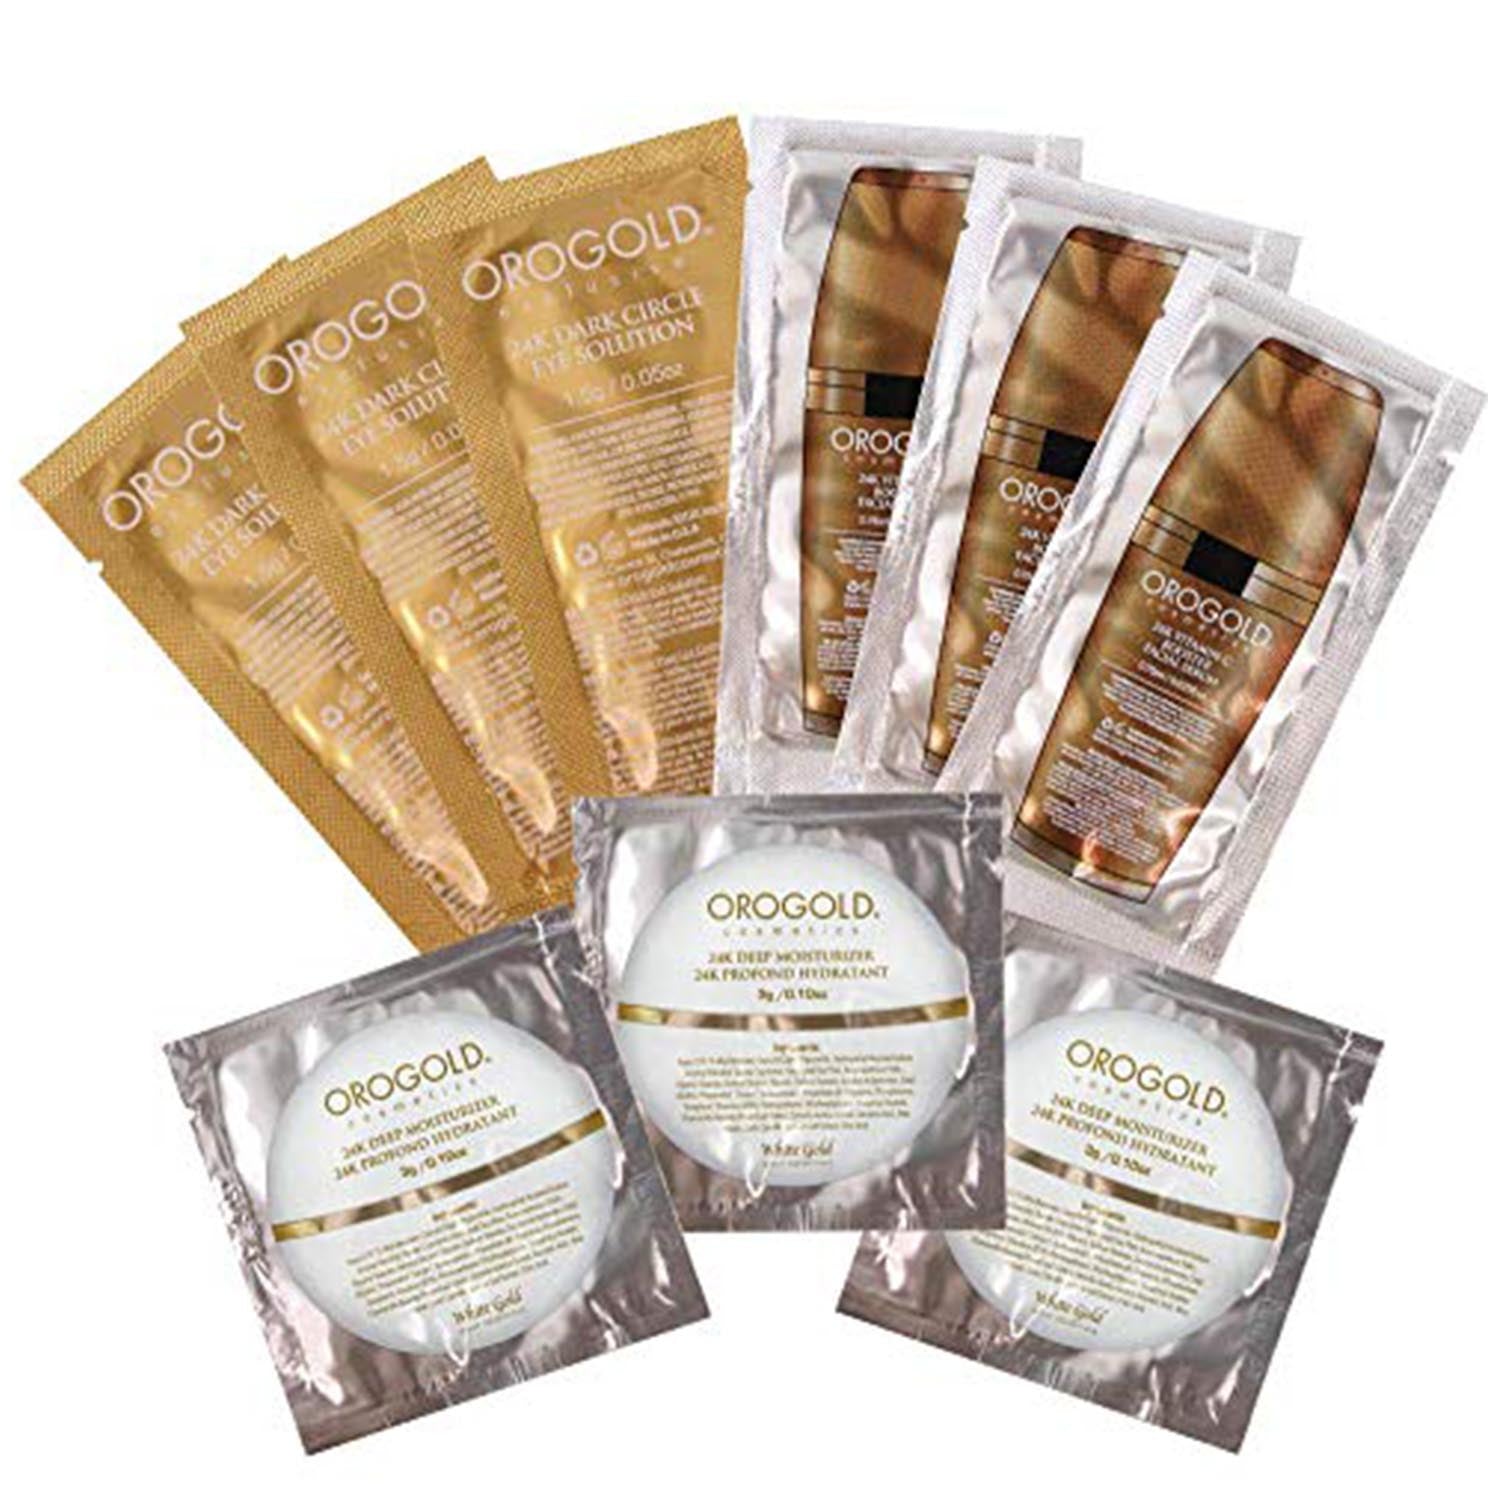 orogold cosmetics samples